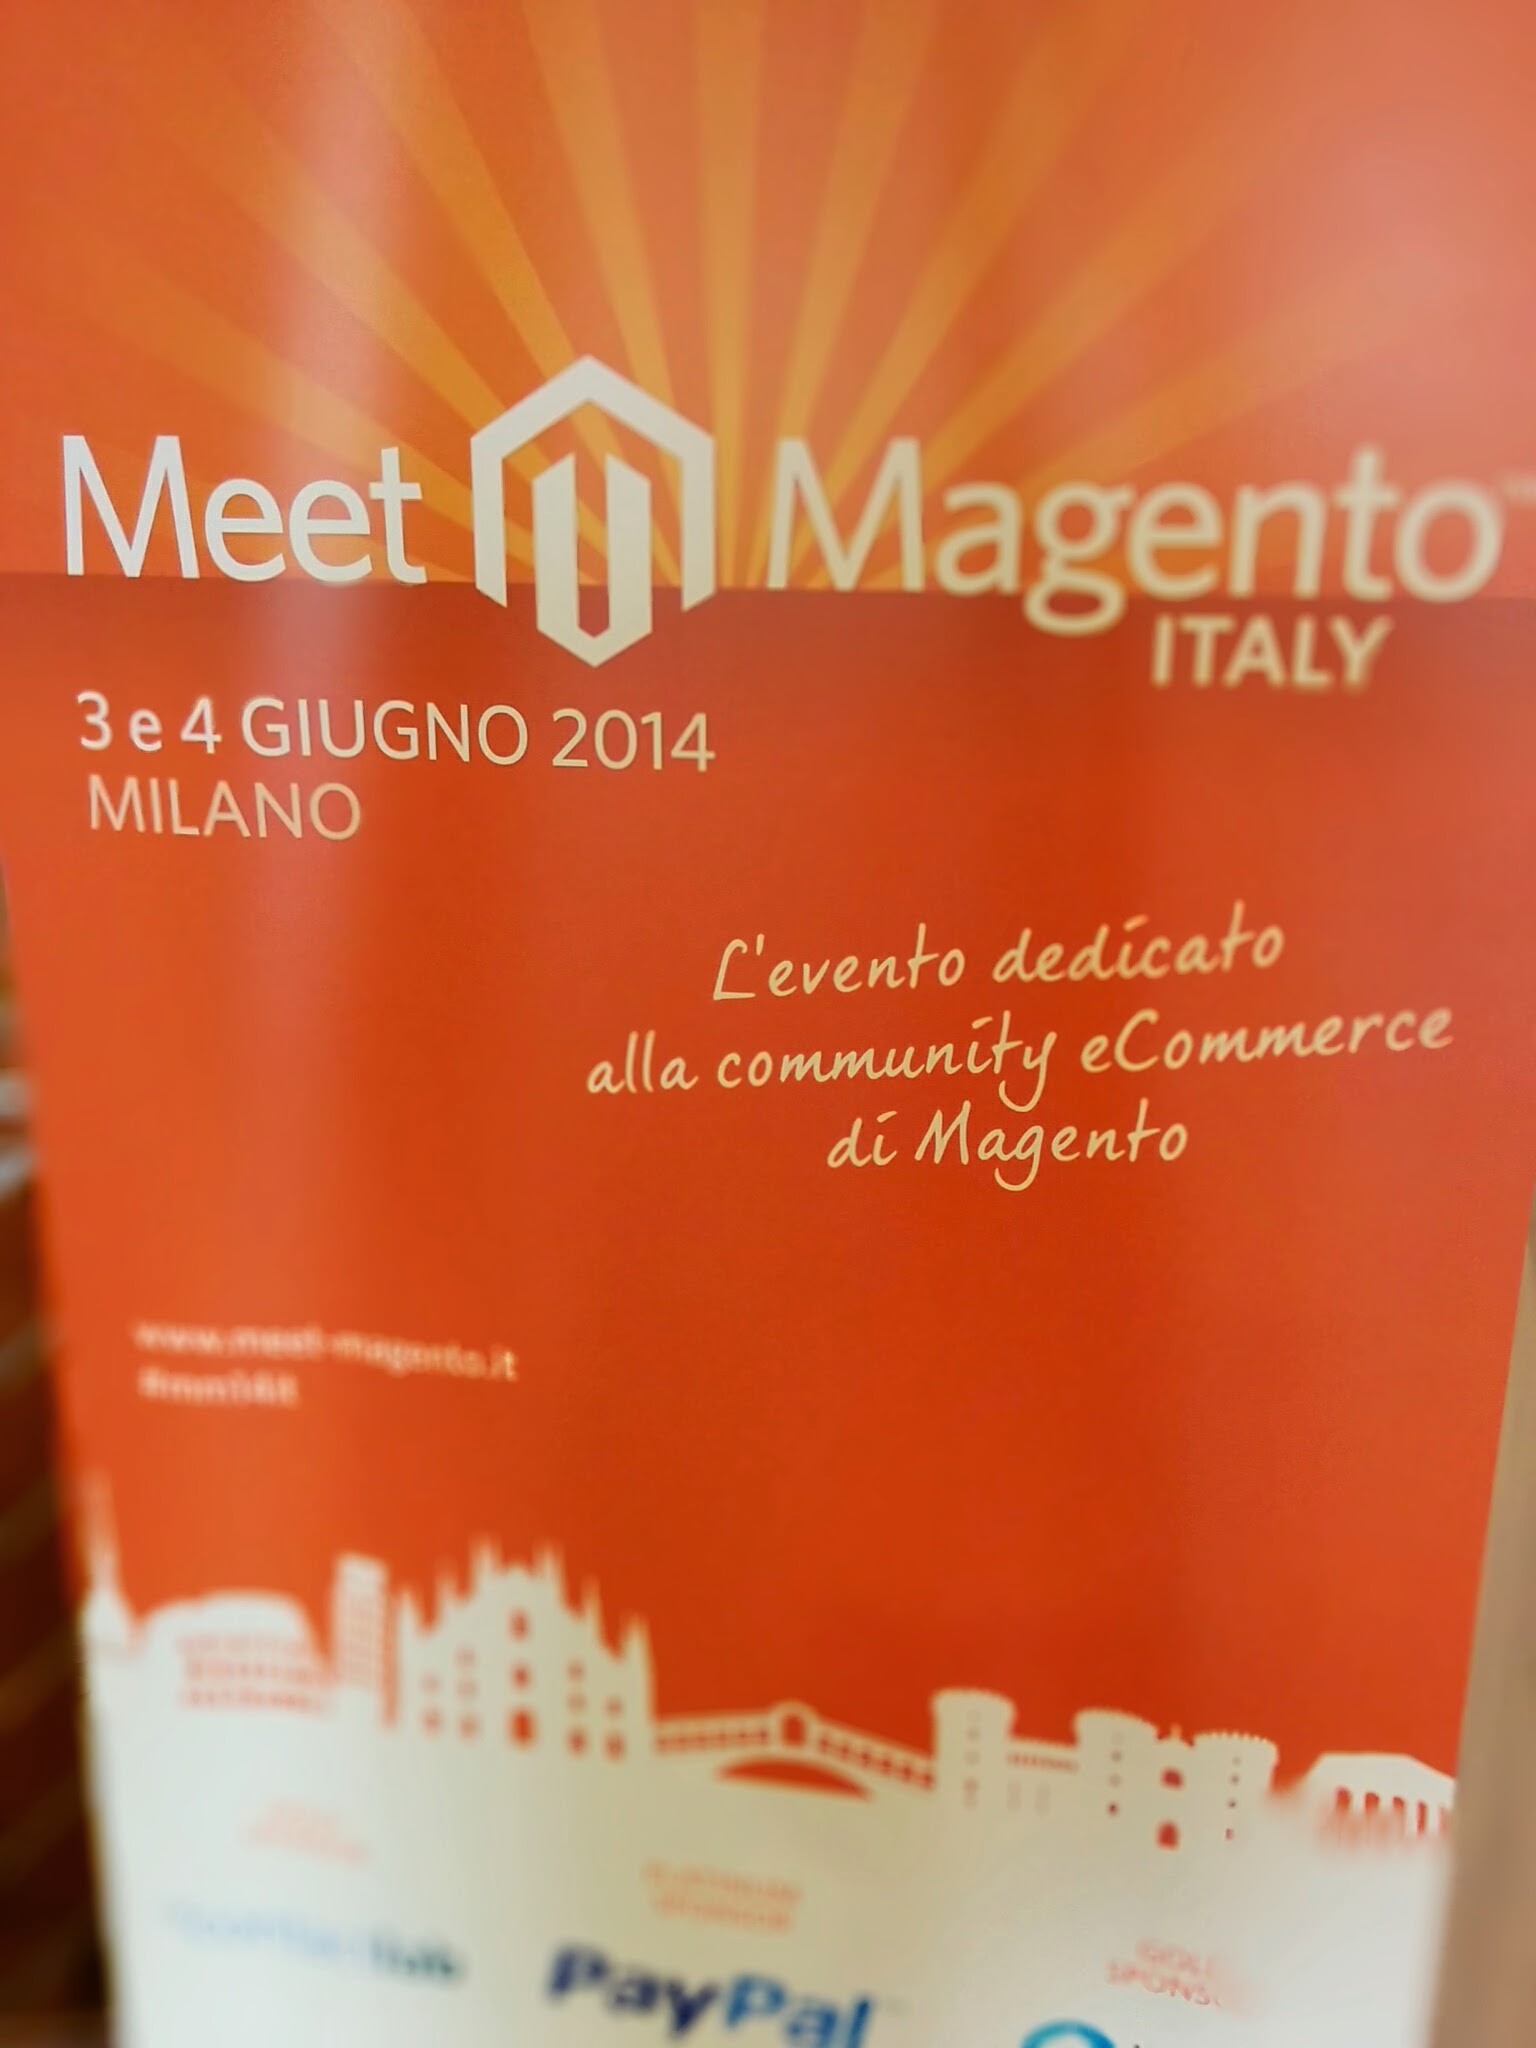 Storia del primo Meet Magento Italia